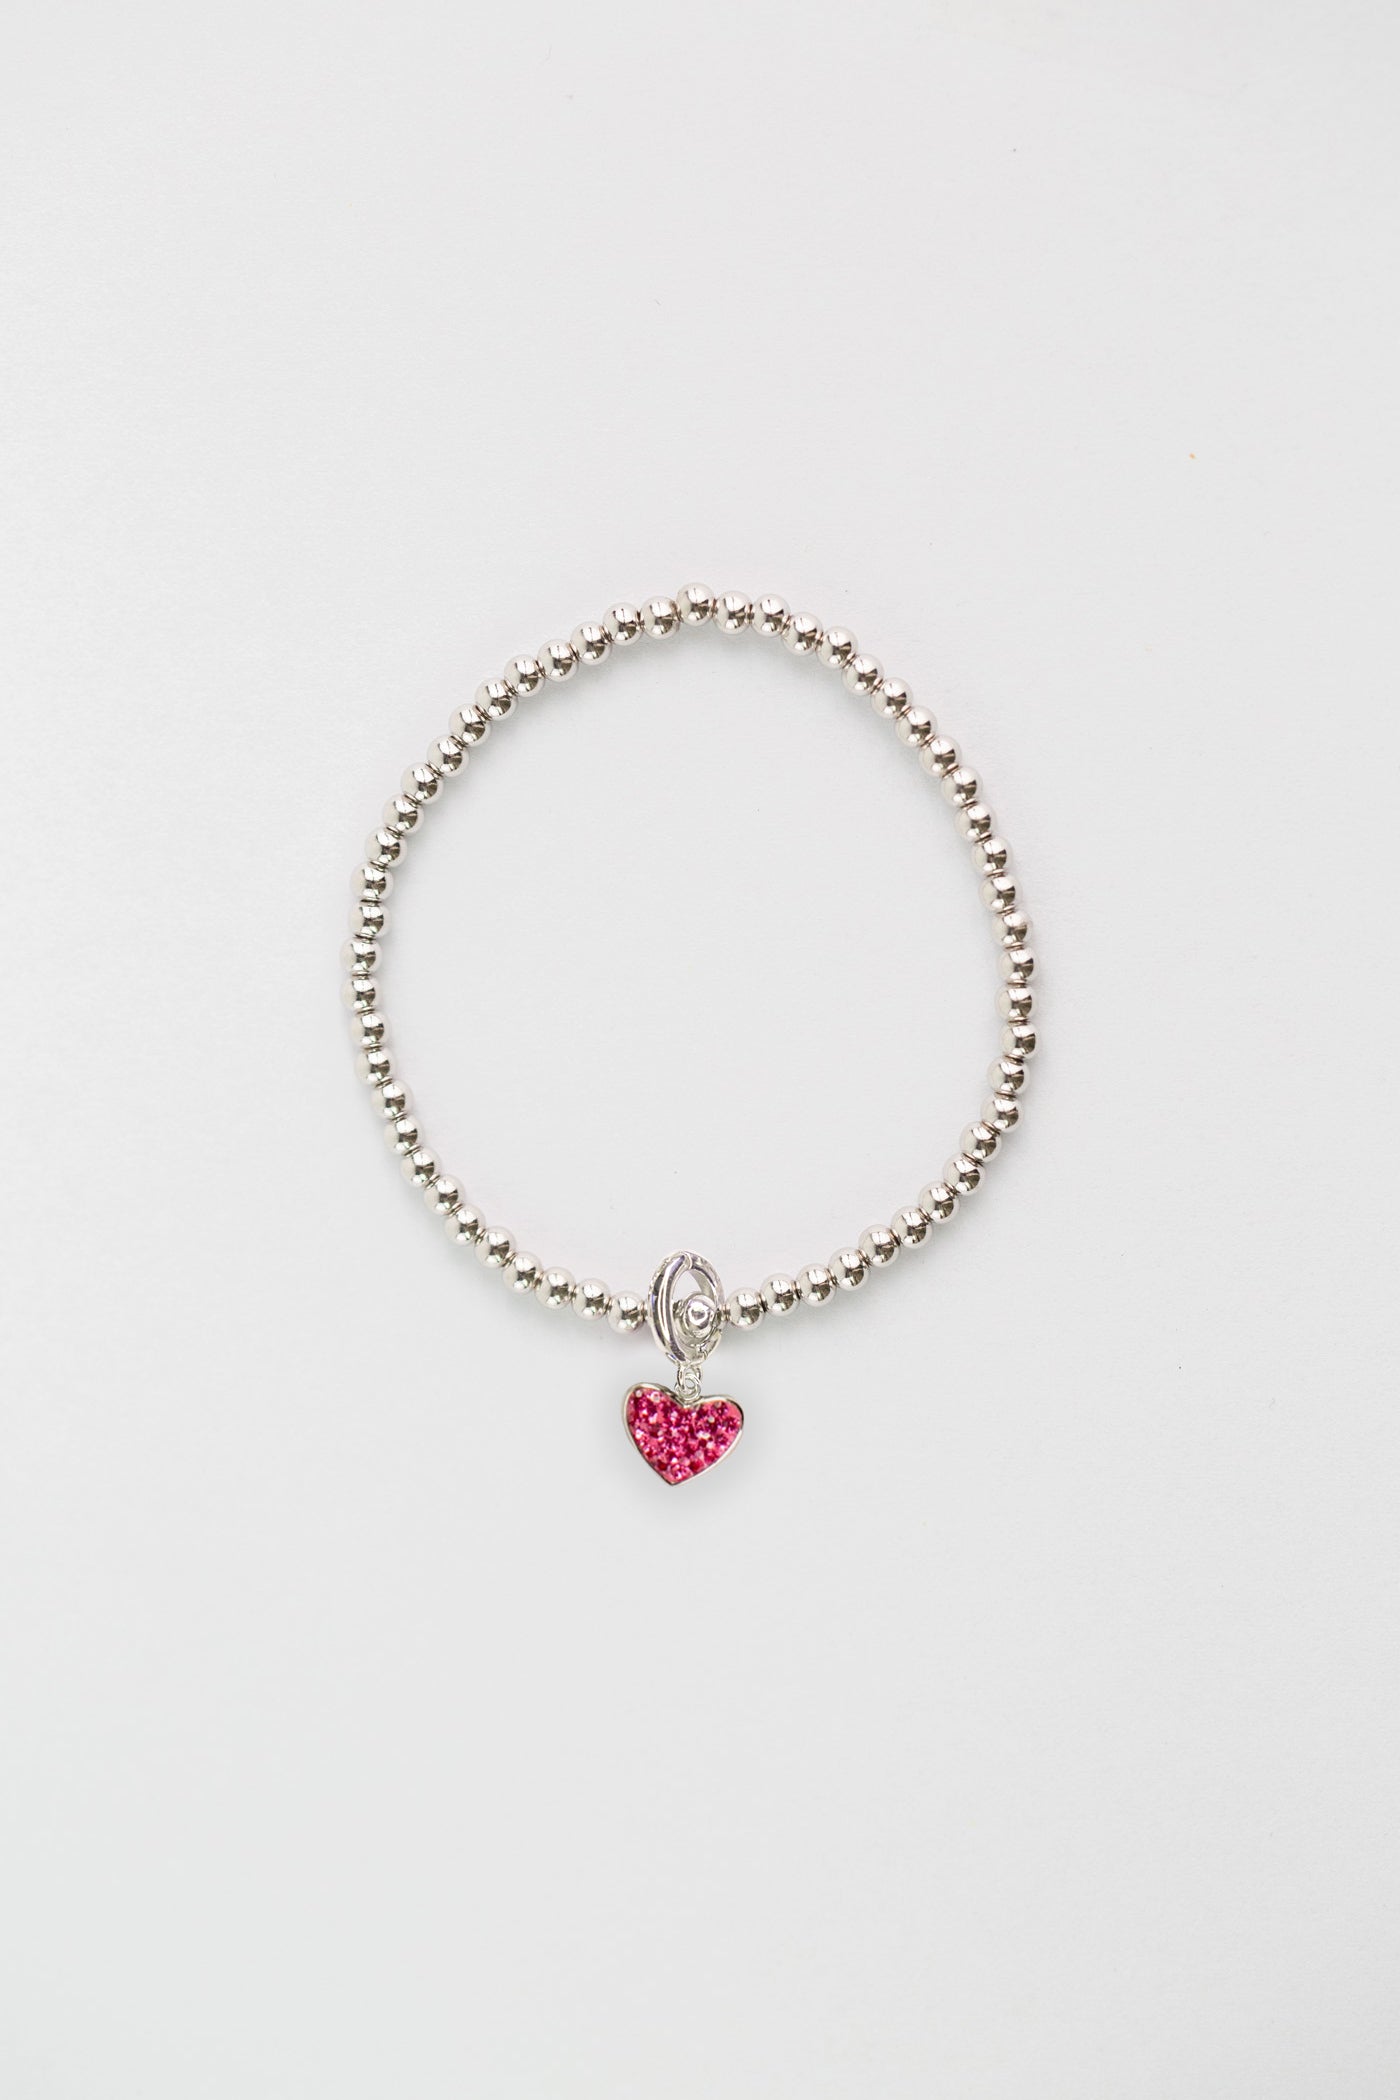 Heart Crystal Charm Sterling Silver Beaded Bracelets, Friendship Bracelet